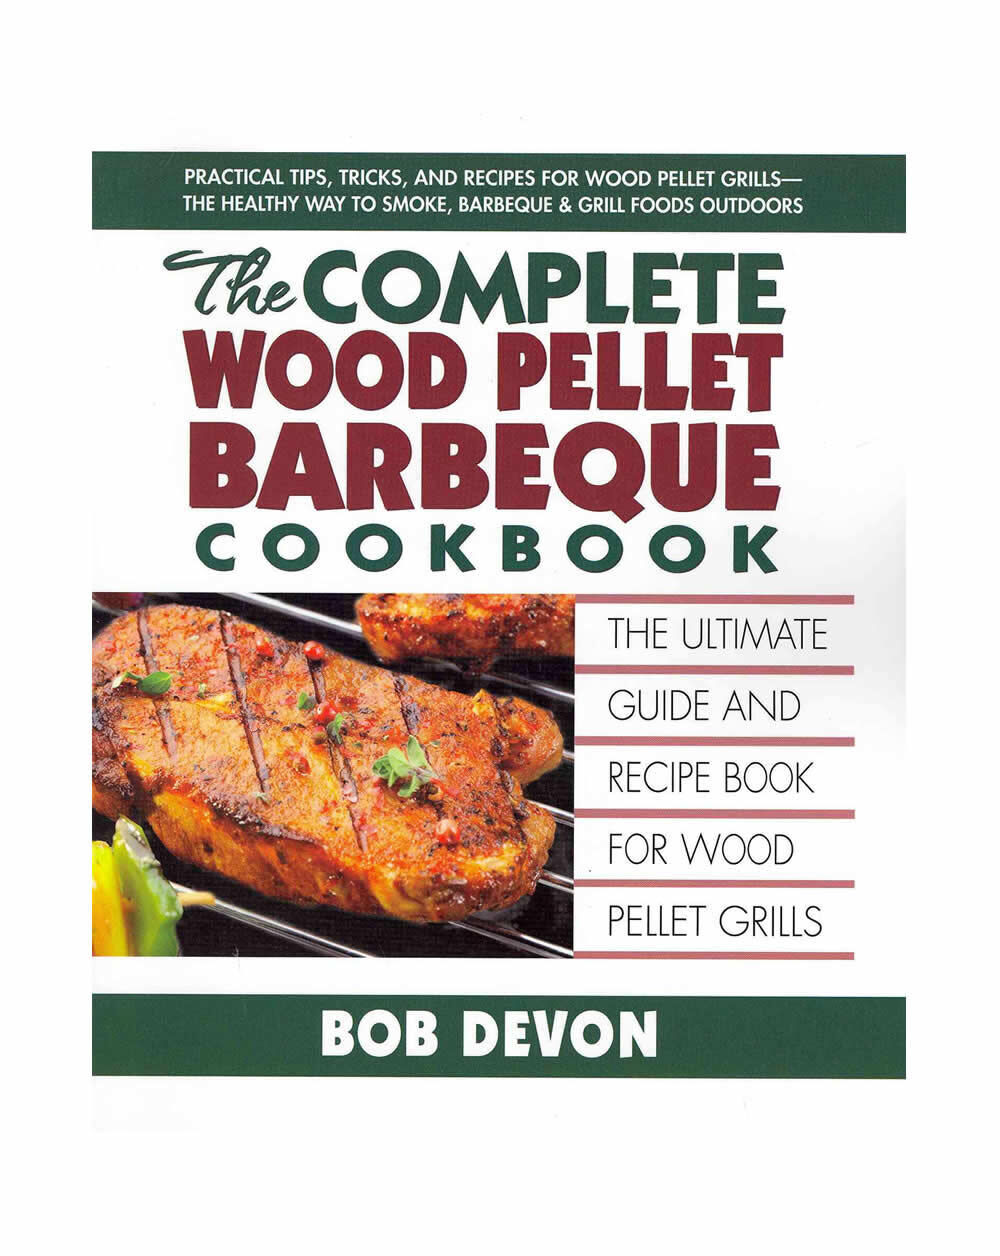 The Complete Wood Pellet Barbeque Cookbook